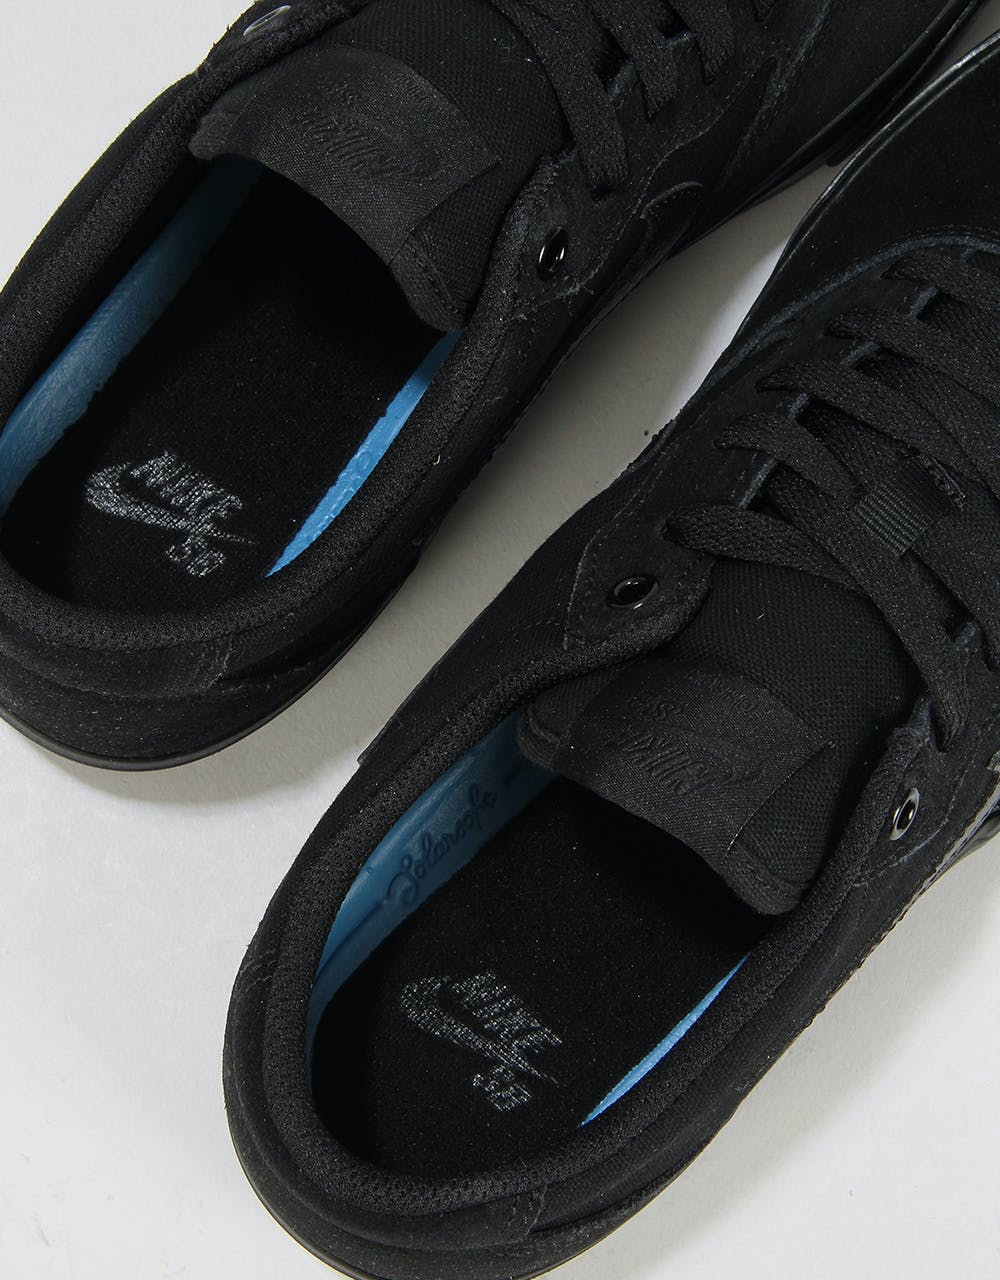 Nike SB Chron Solarsoft Skate Shoes - Black/Black-Black-Black